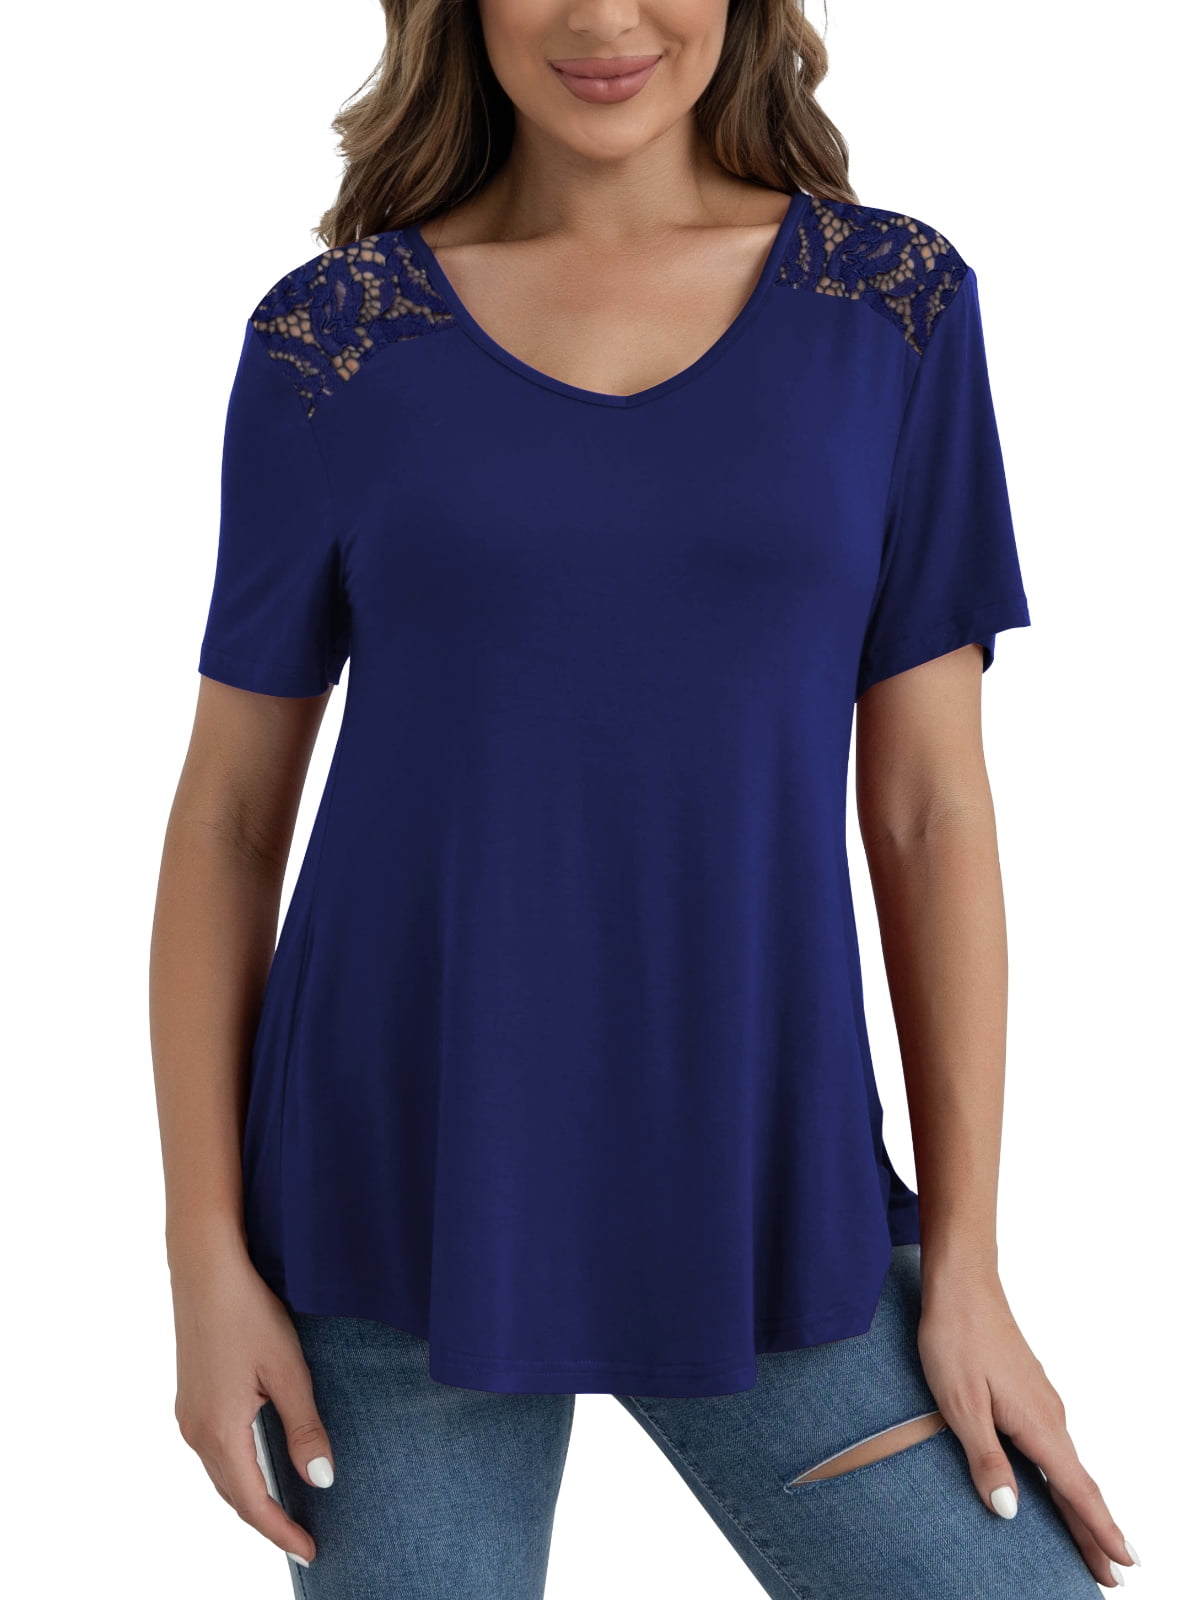 VERABENDI Womens Tops Plus Size Summer Short Sleeve Tunic Shirts Lace ...